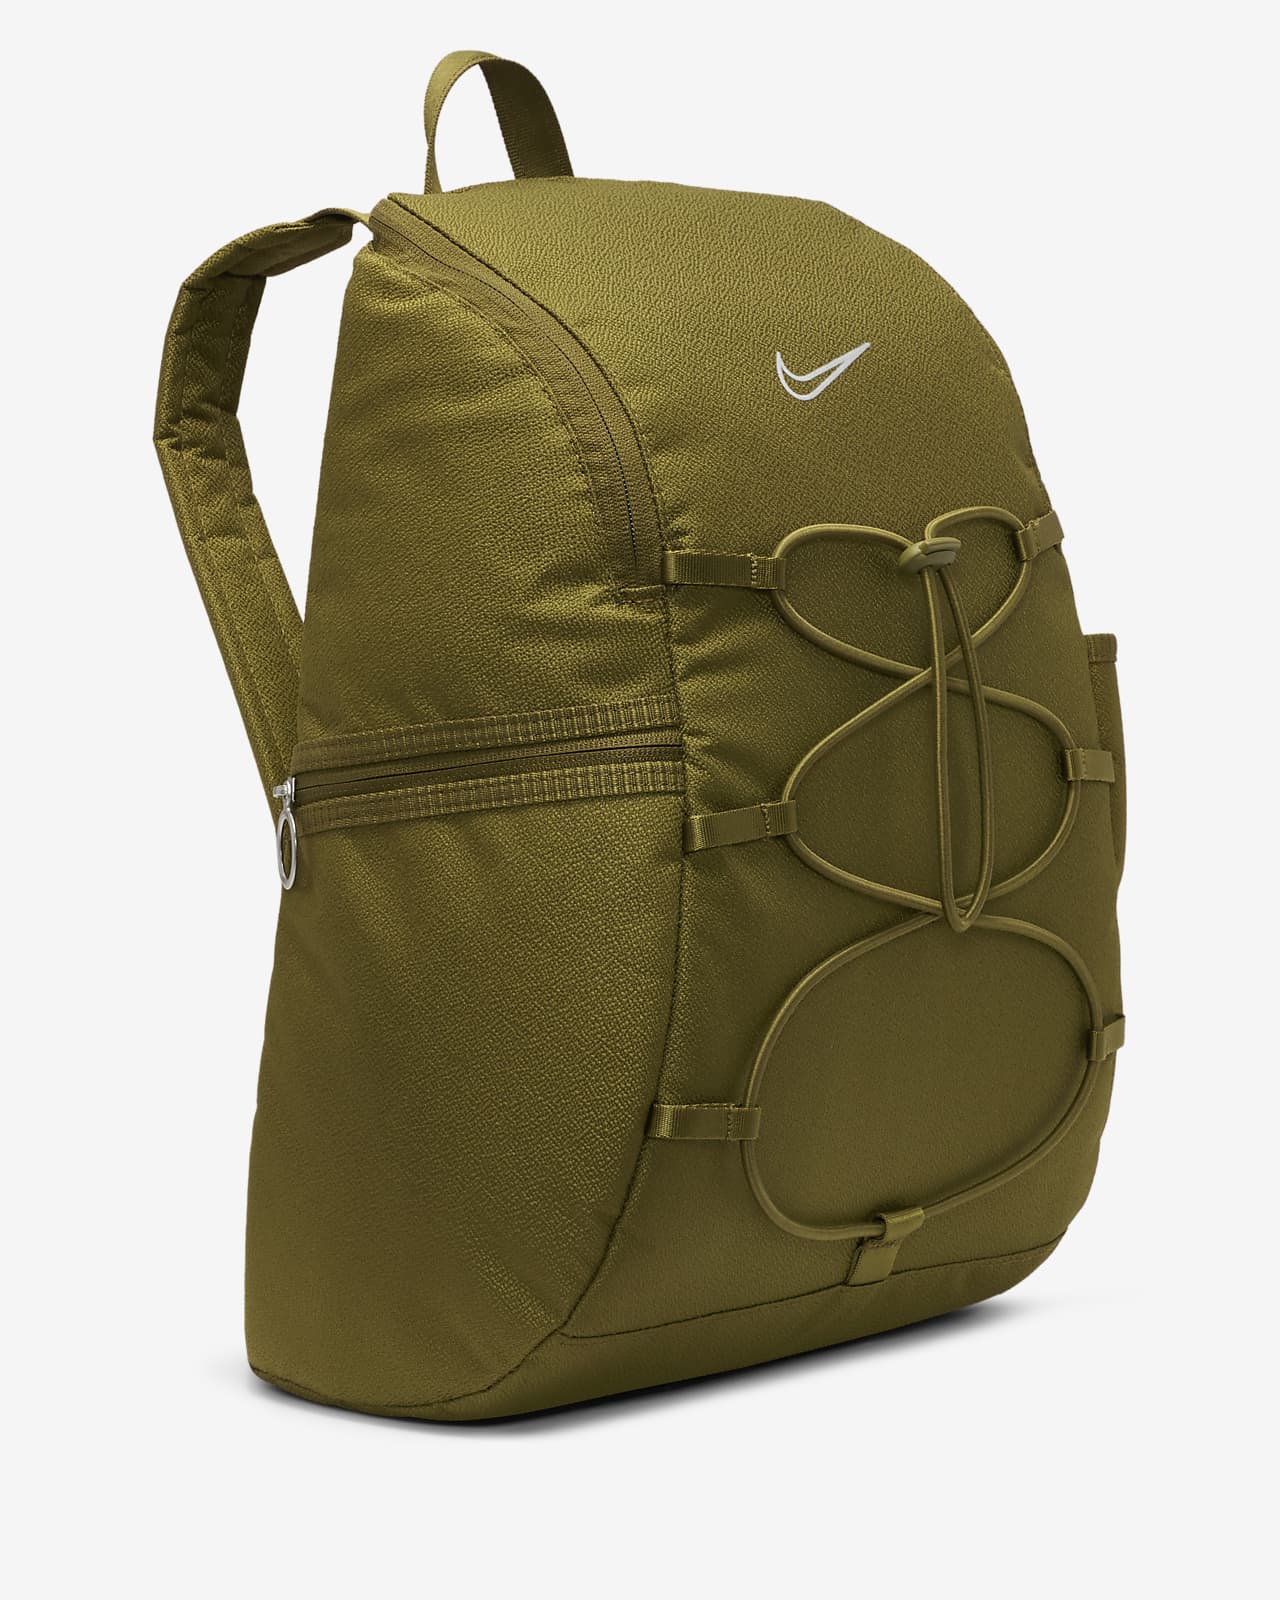 Nike One Training Backpack - Women's 